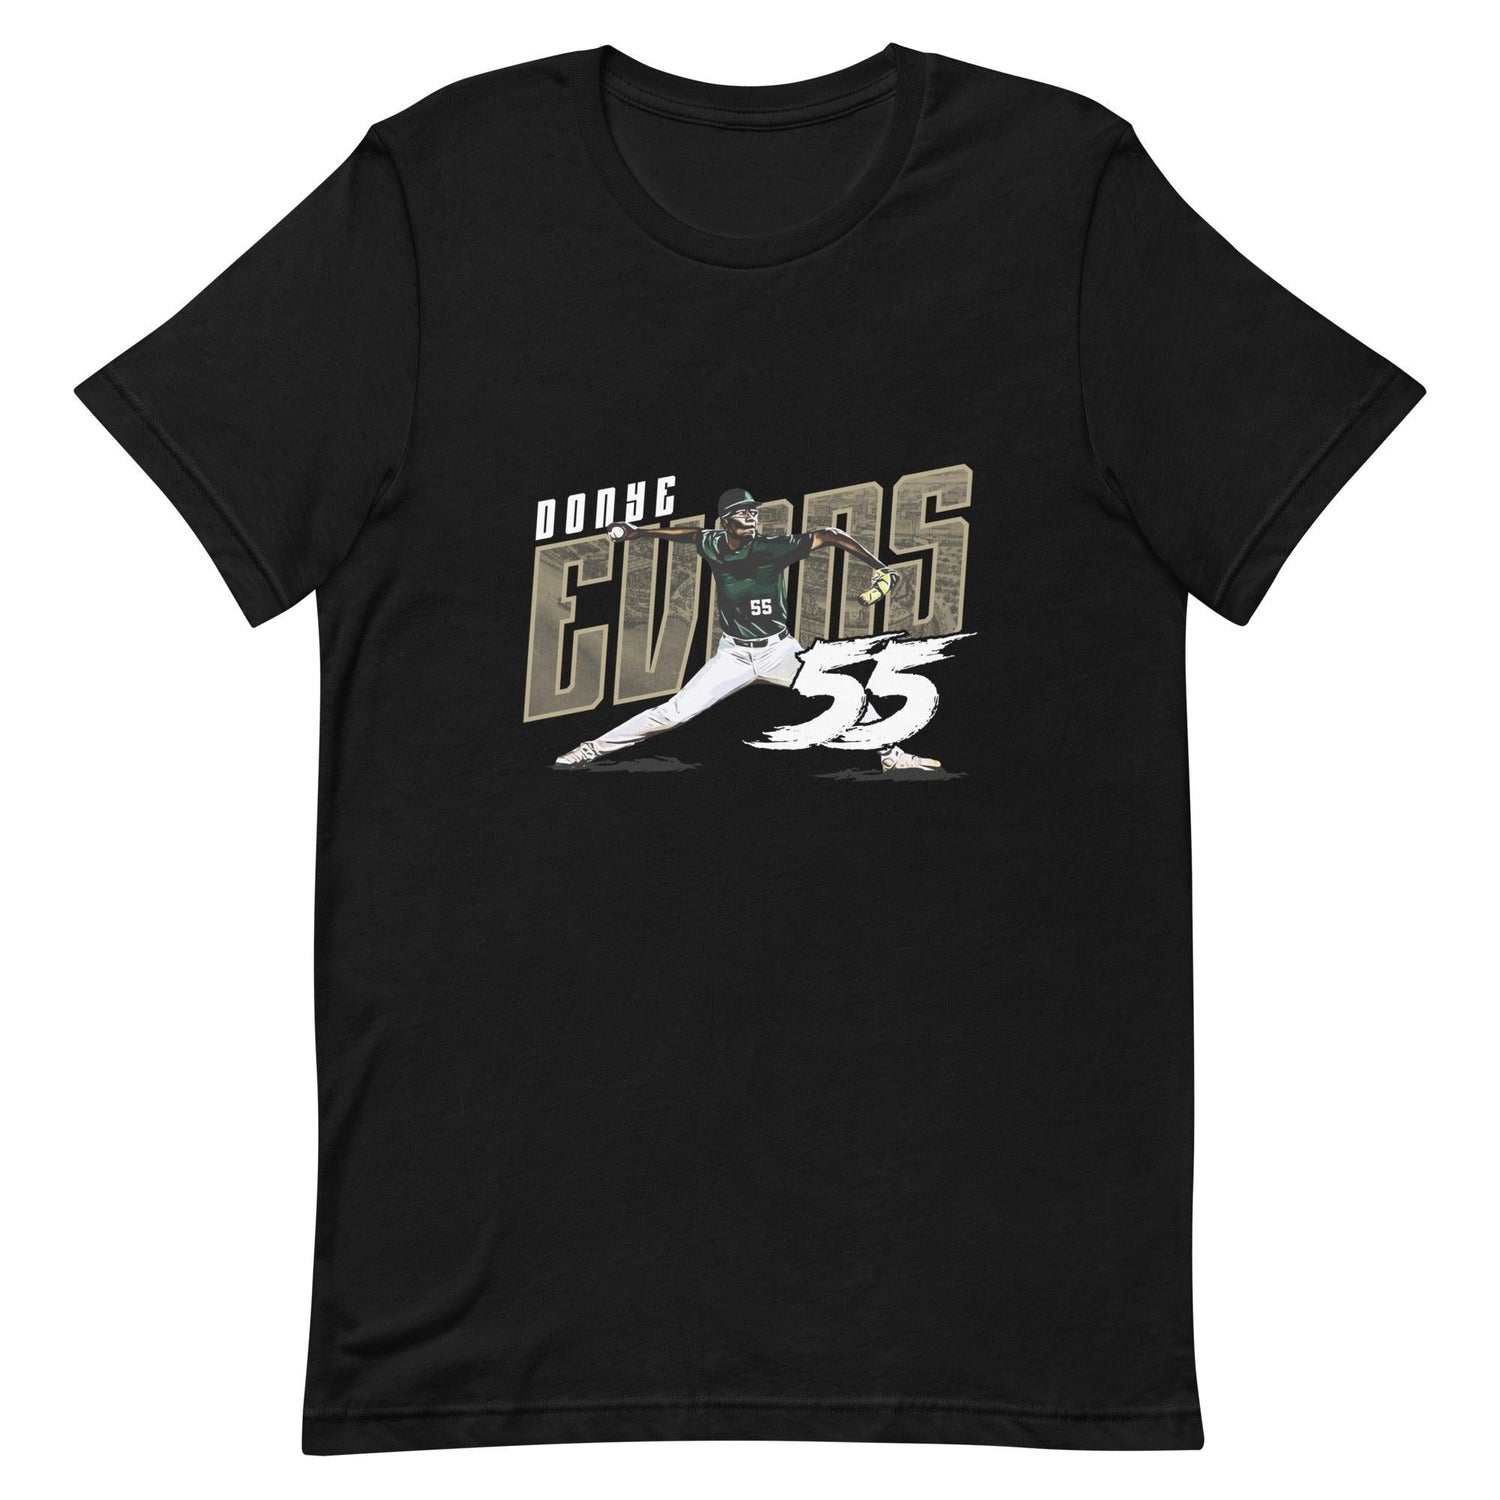 Donye Evans "Gametime" t-shirt - Fan Arch